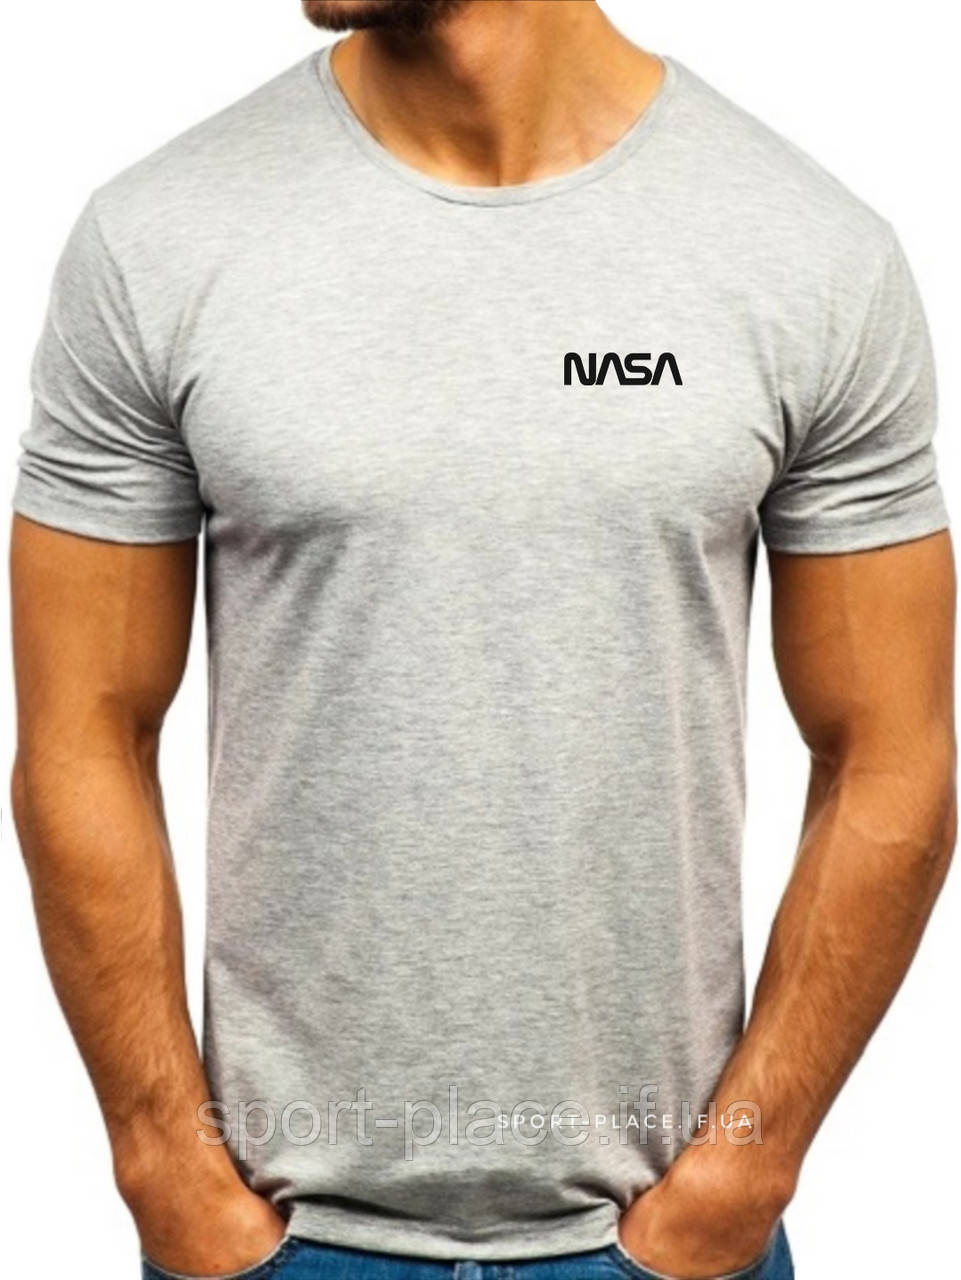 Чоловіча футболка Nasa (Nasa) сіра (маленька емблема) бавовна